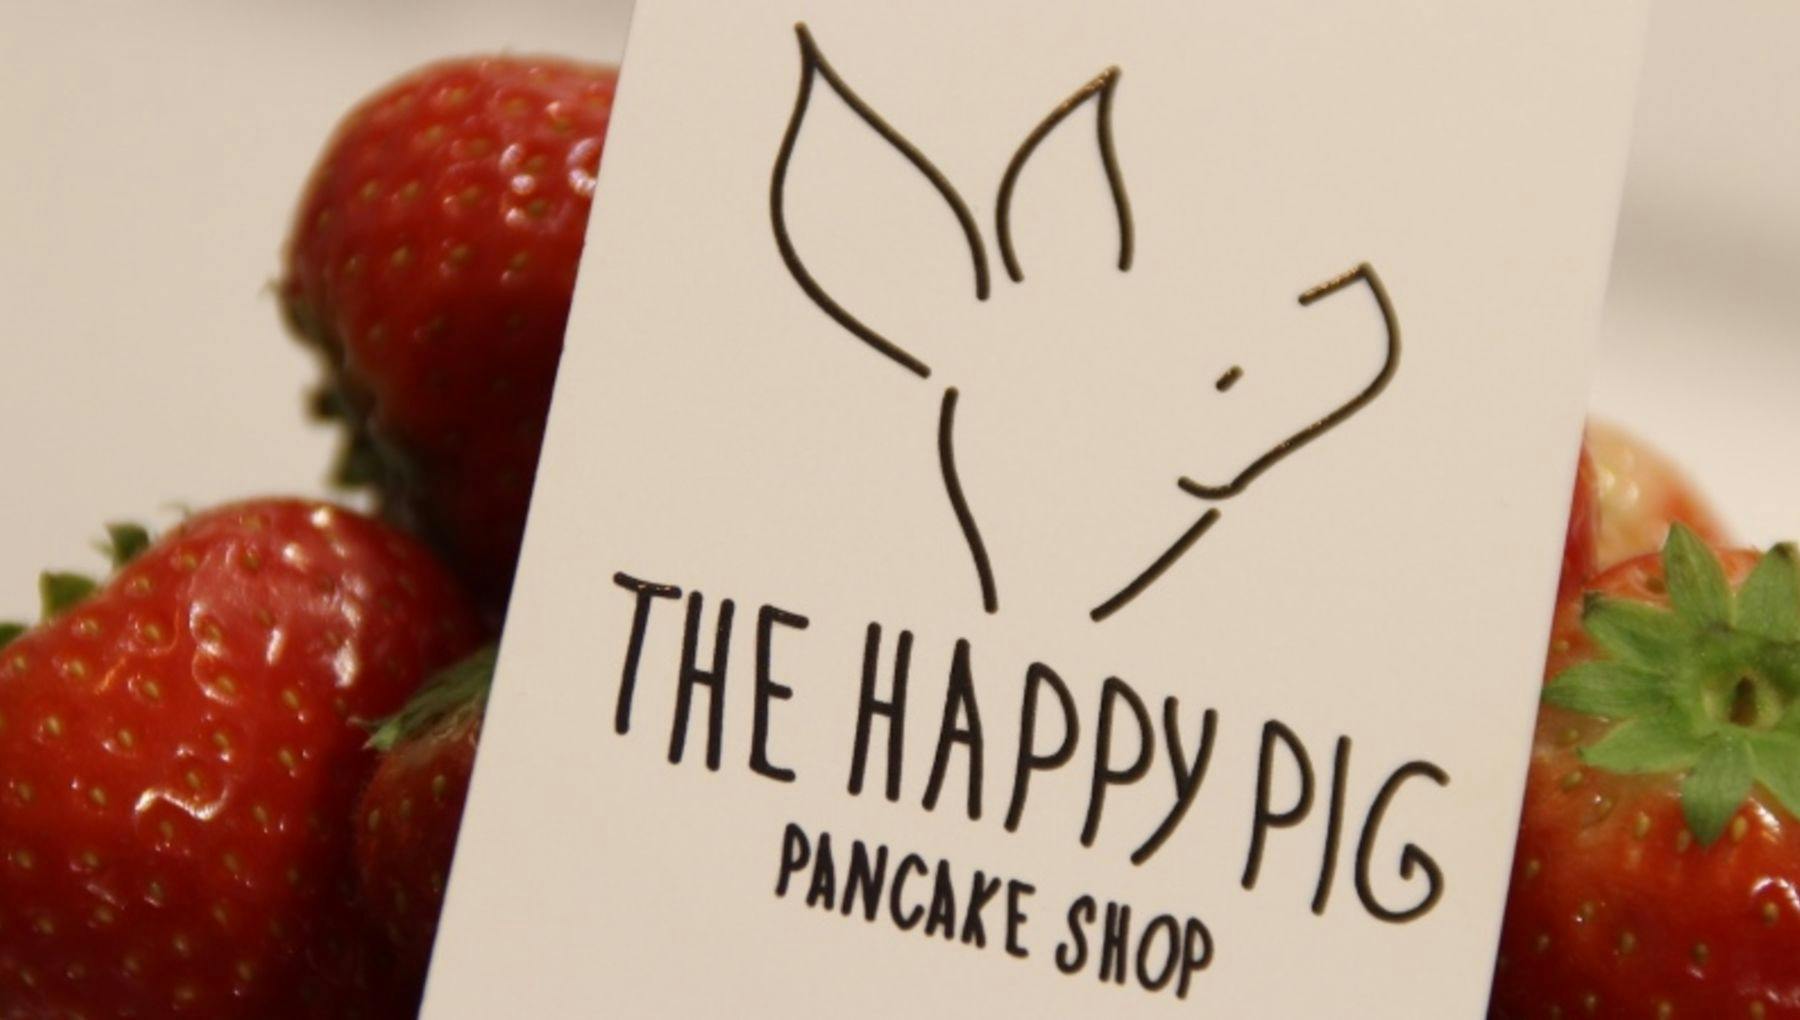 The Happy Pig Pancake Shop